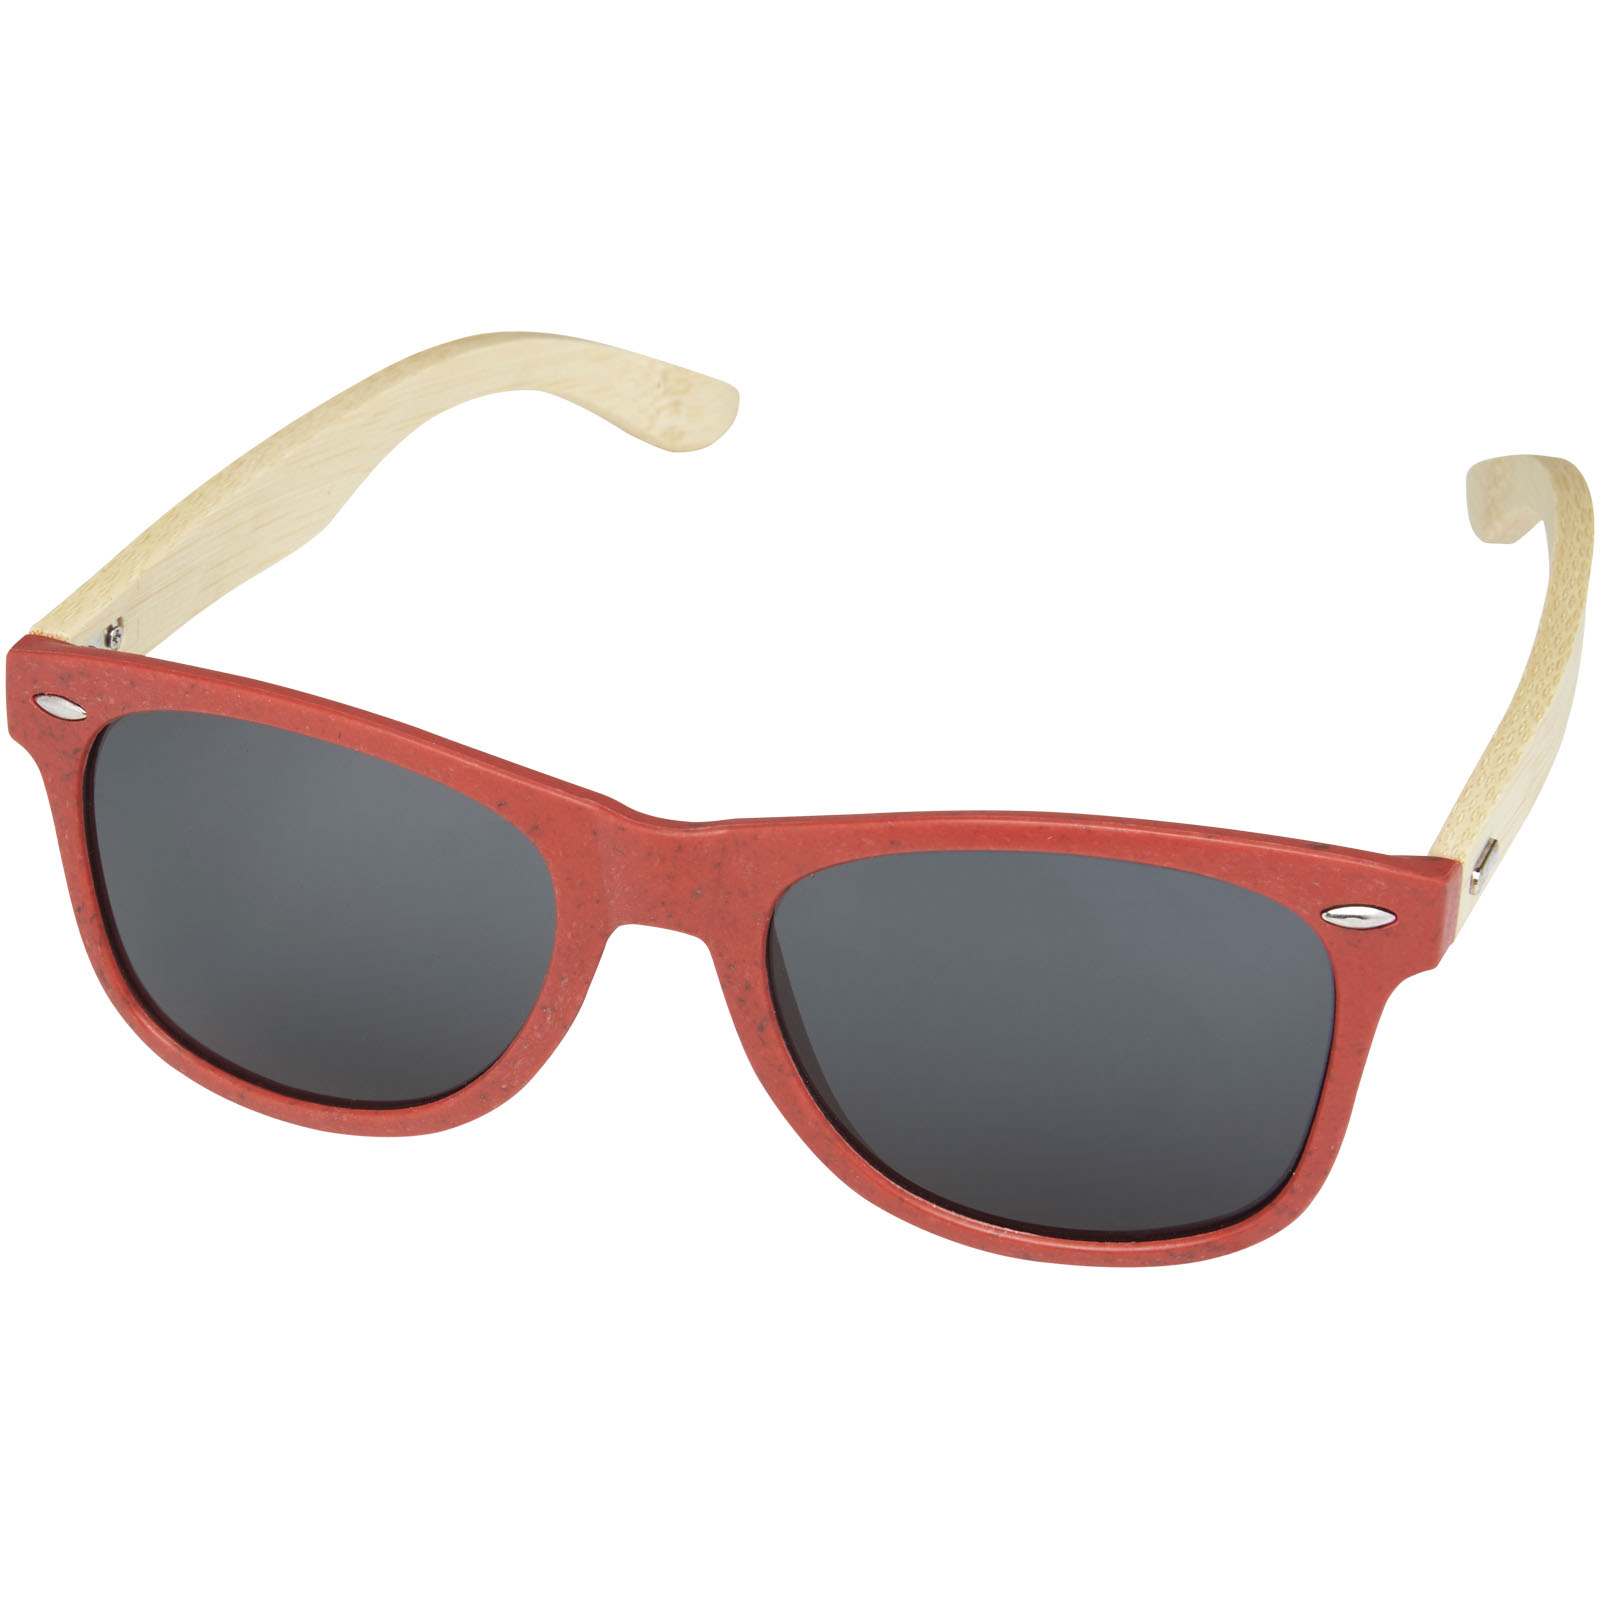 Sports & Leisure - Sun Ray bamboo sunglasses